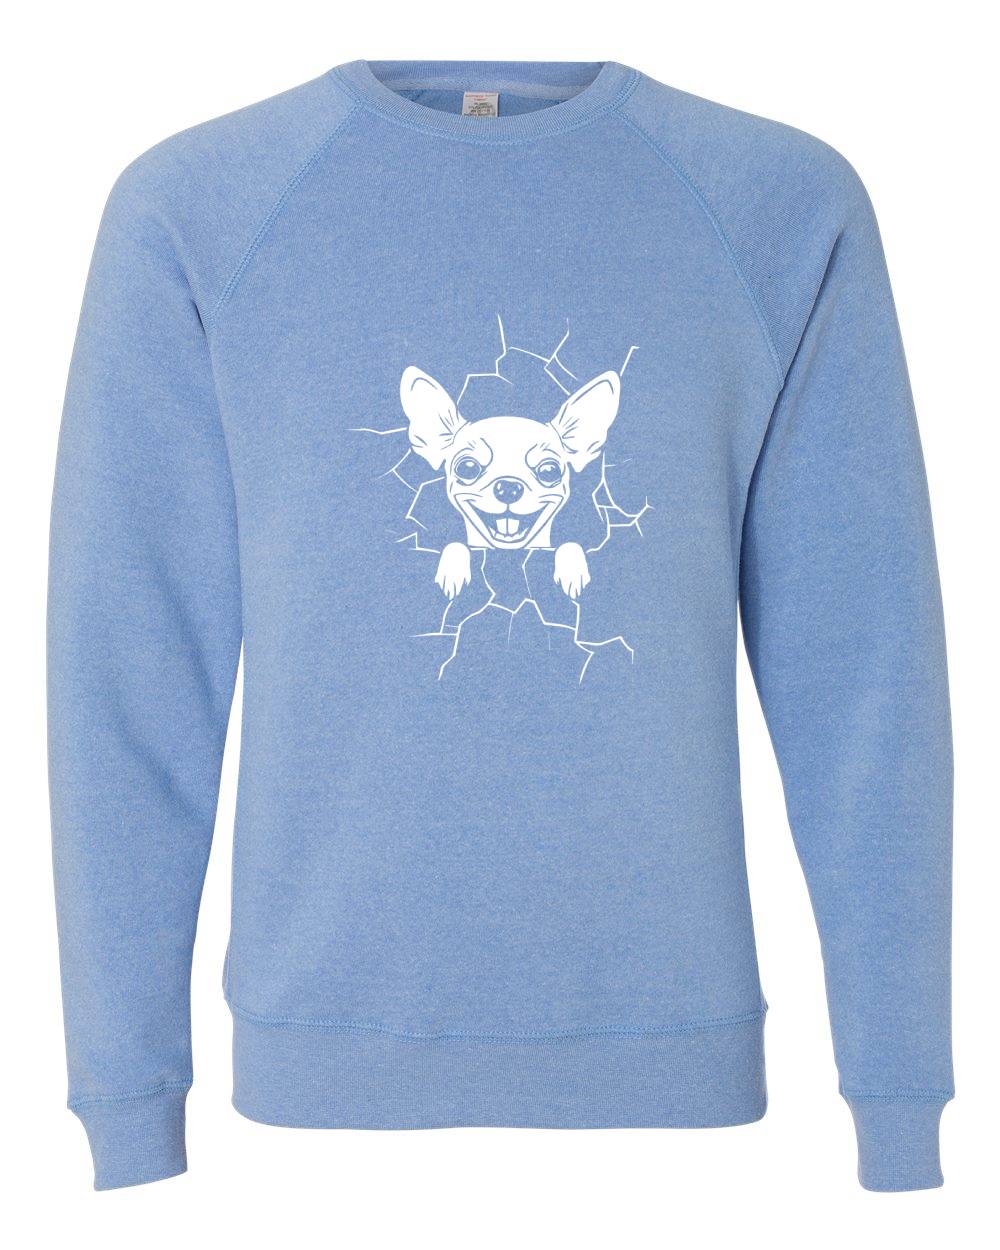 Chihuahua Wall Crack Sweatshirt